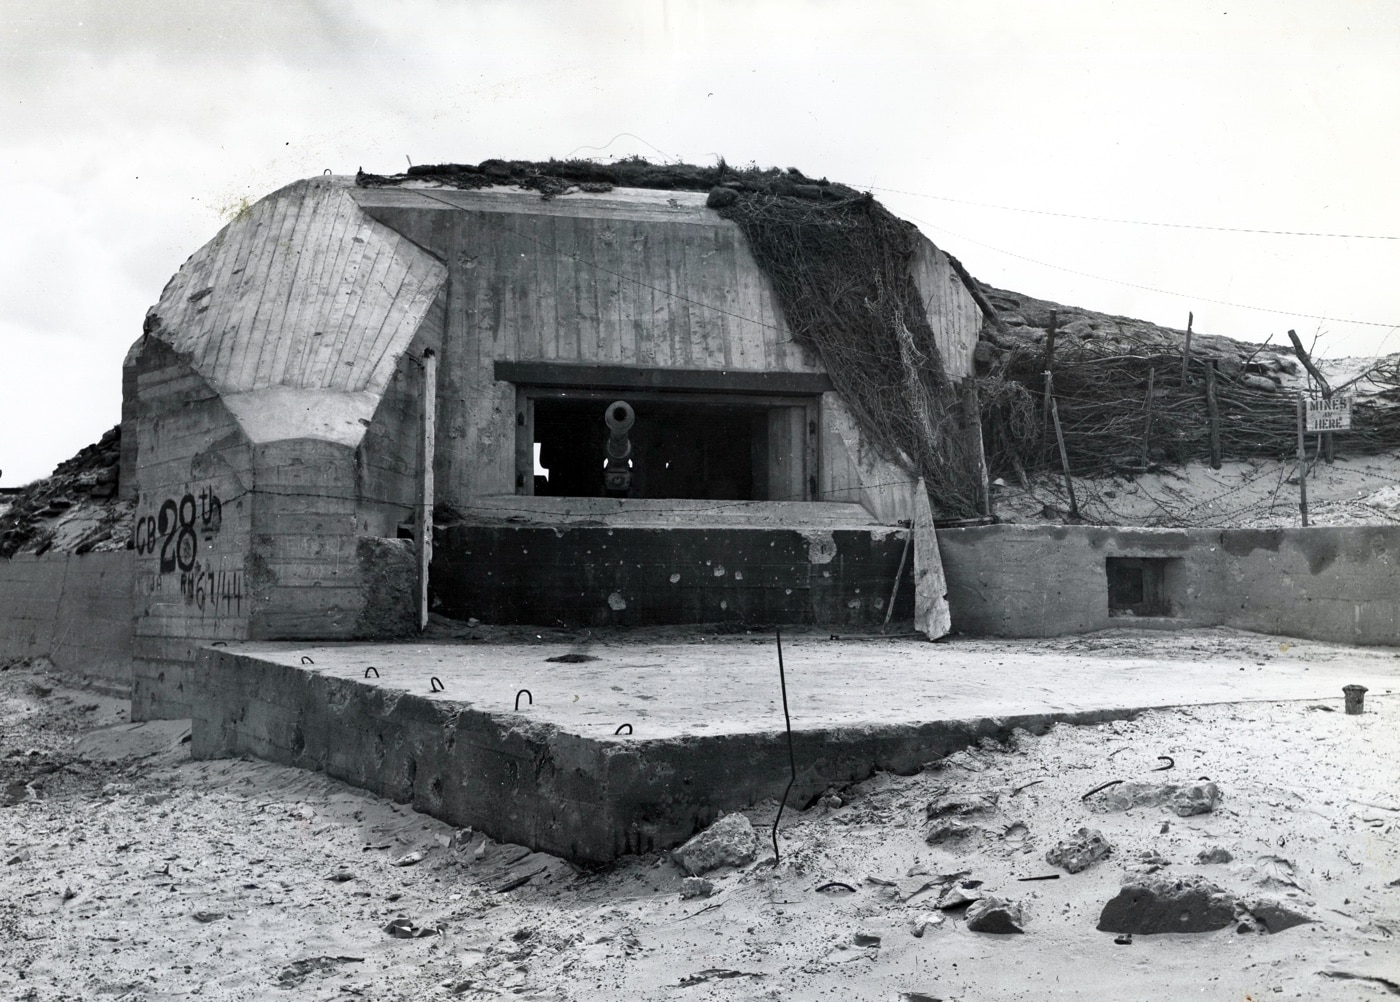 In this photo, a German 88mm Pak 43/41 gun bunker is seen on Utah beach. The Pak 43/41 guns were quite powerful.